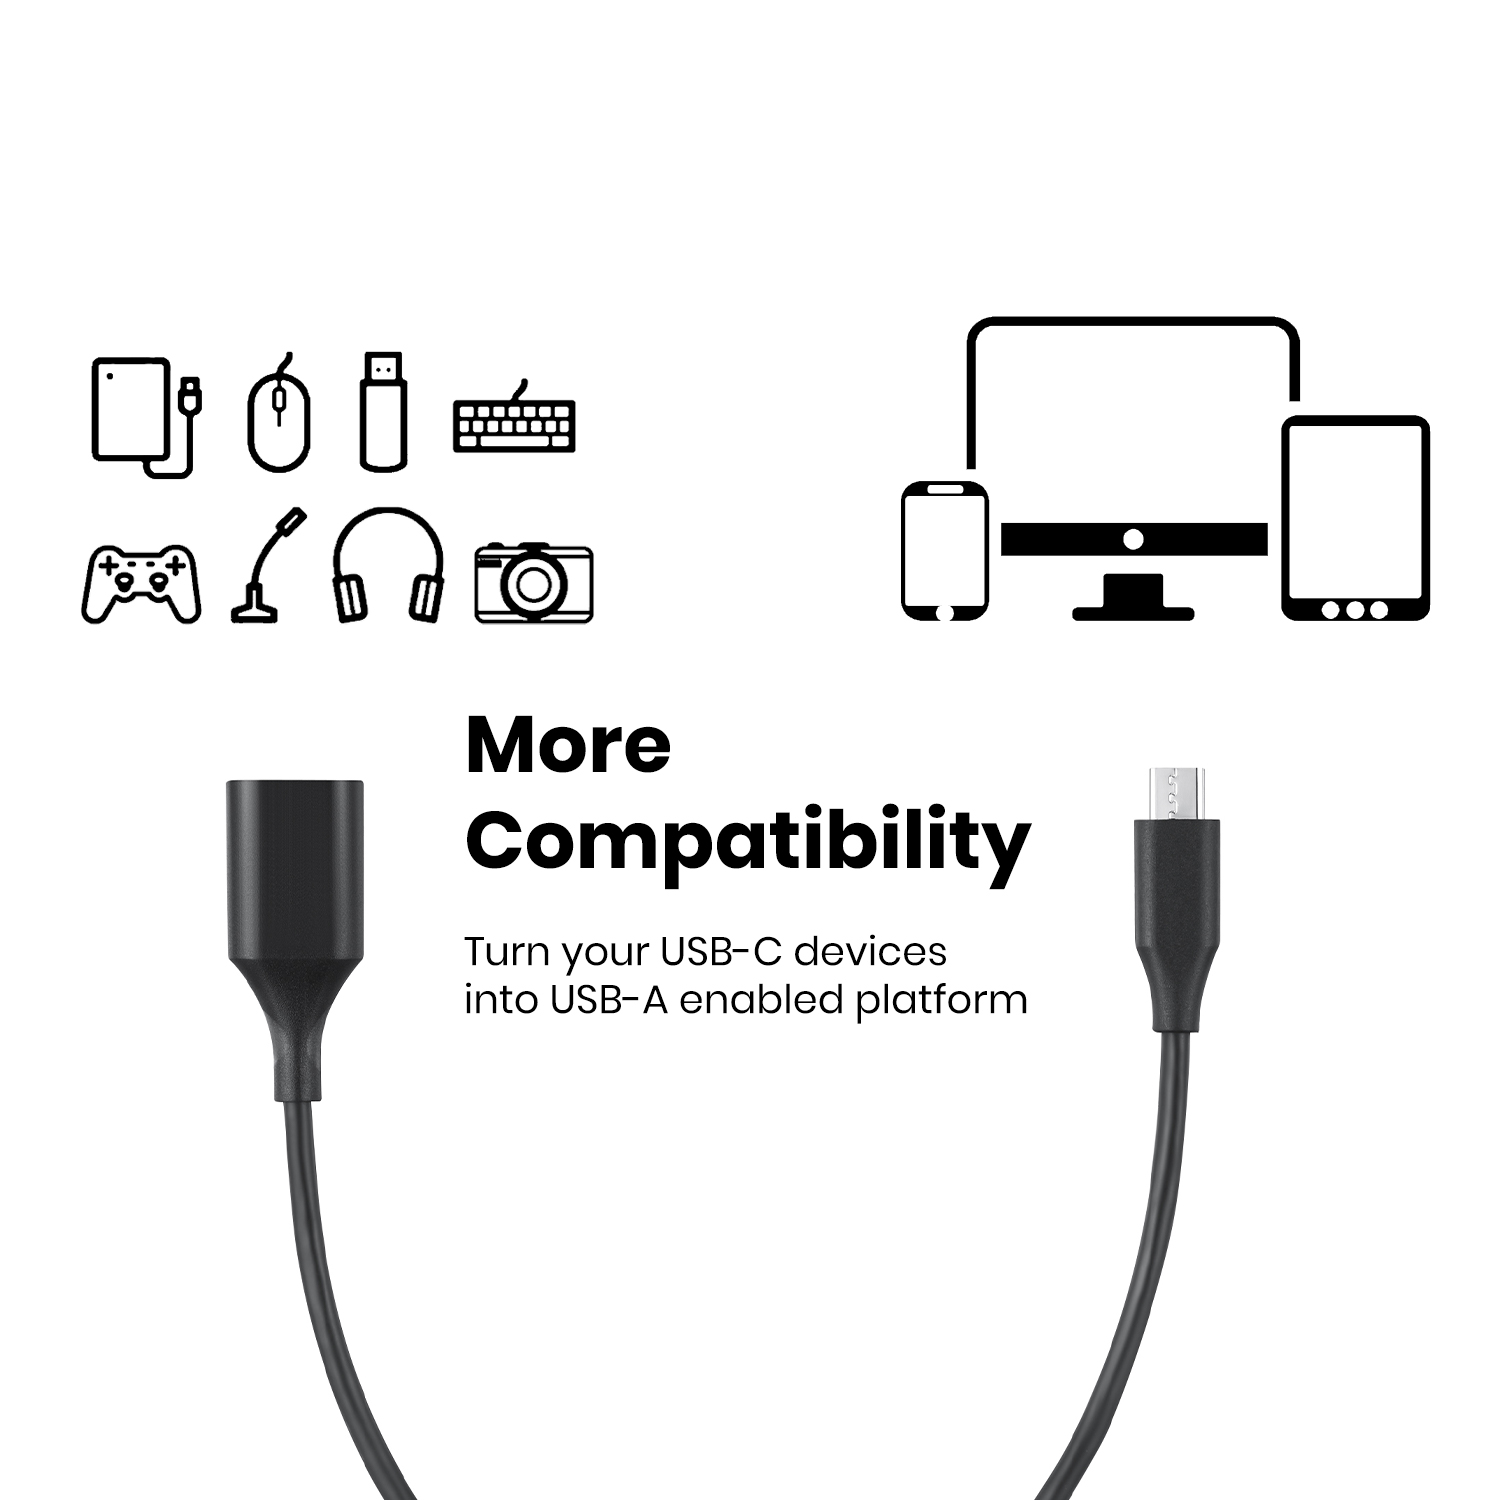 Universal Compatibility